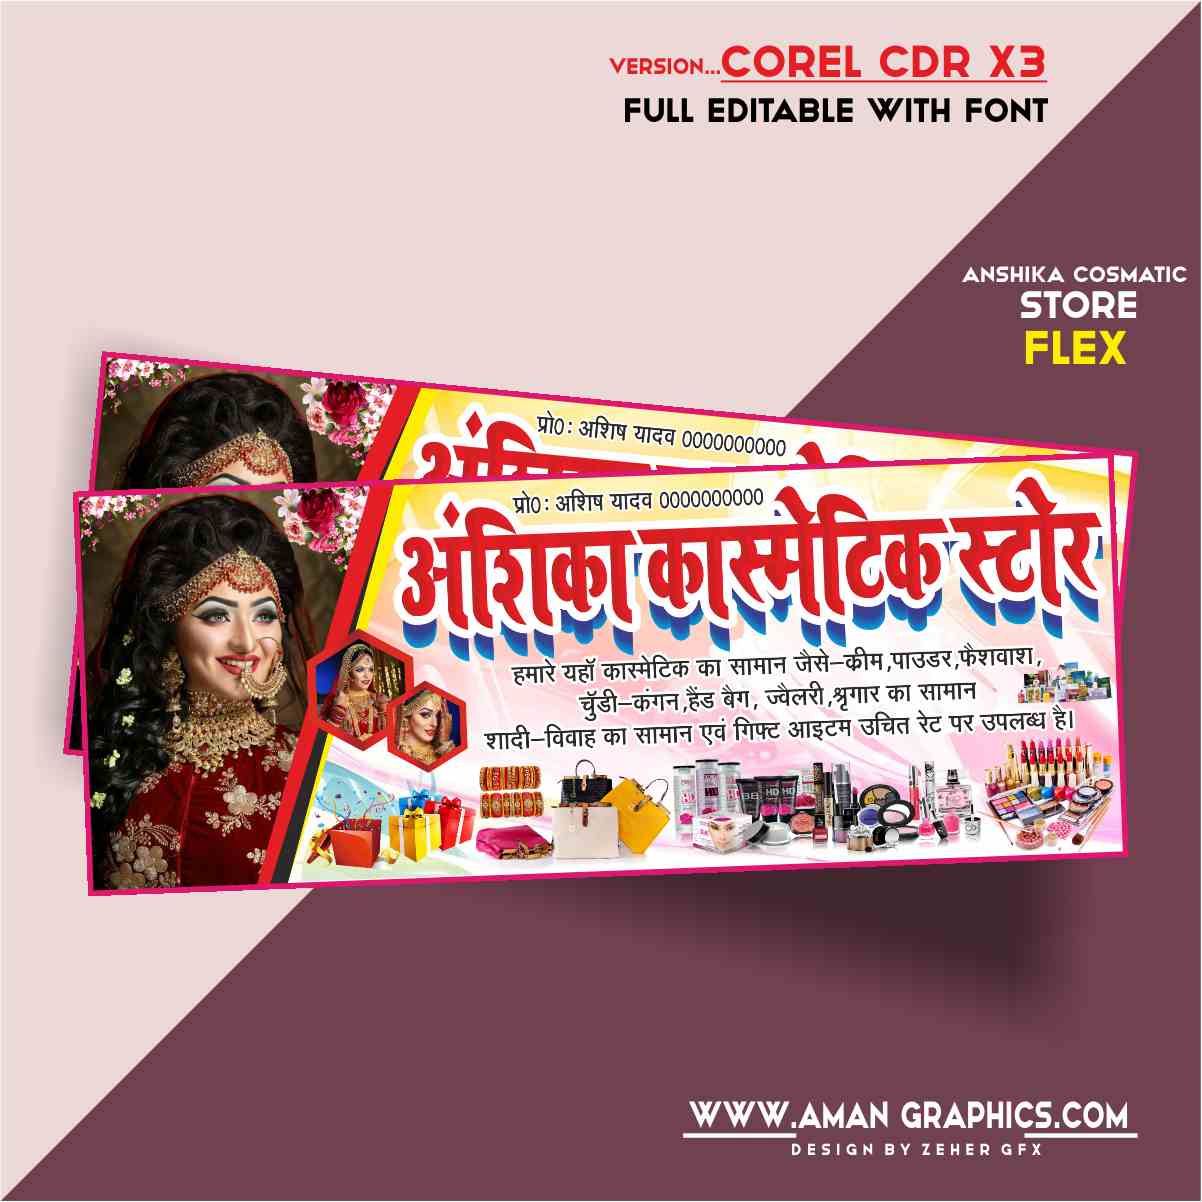 Ankshika Cosmatic Store Banner Design Cdr File